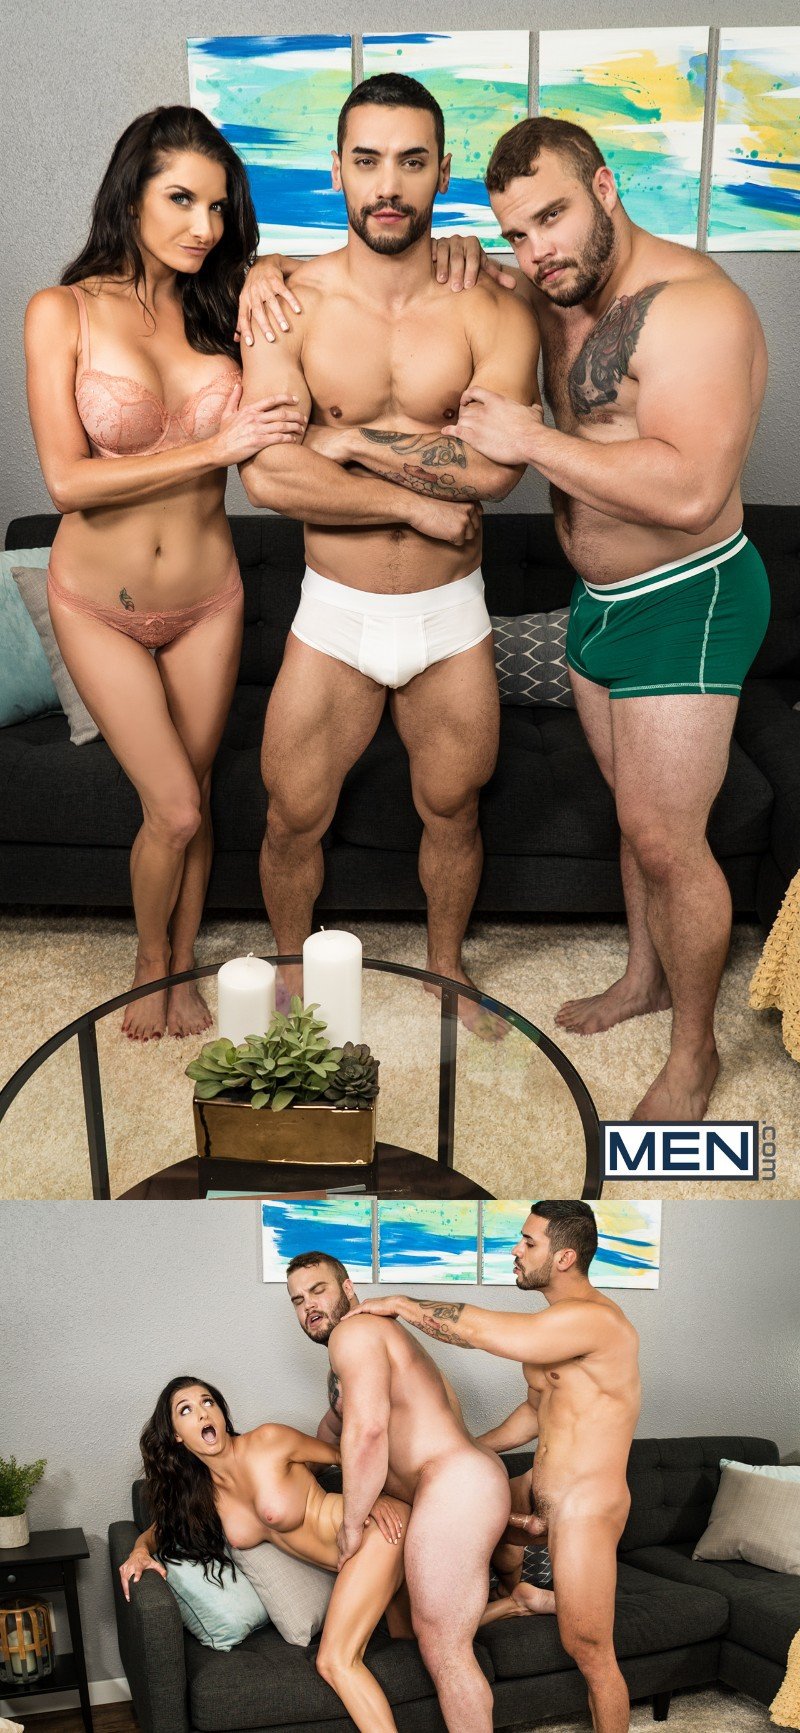 Bi Sexual Men - MEN.com Releases Its First Bisexual Scene & Members Hate It ...